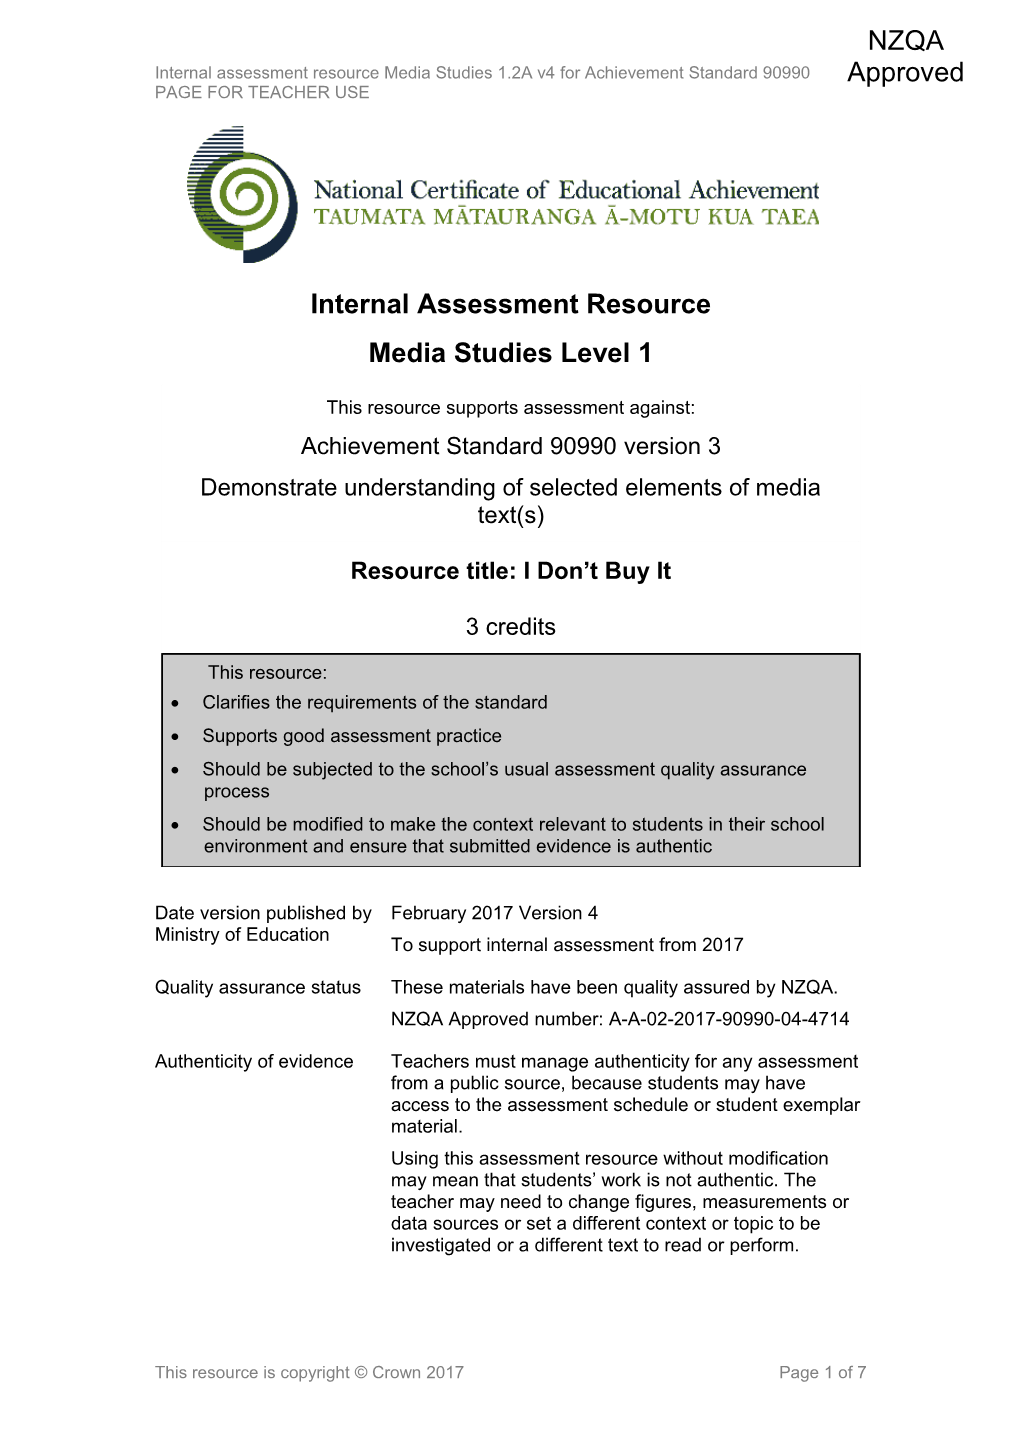 Level 1 Media Studies Internal Assessment Resource